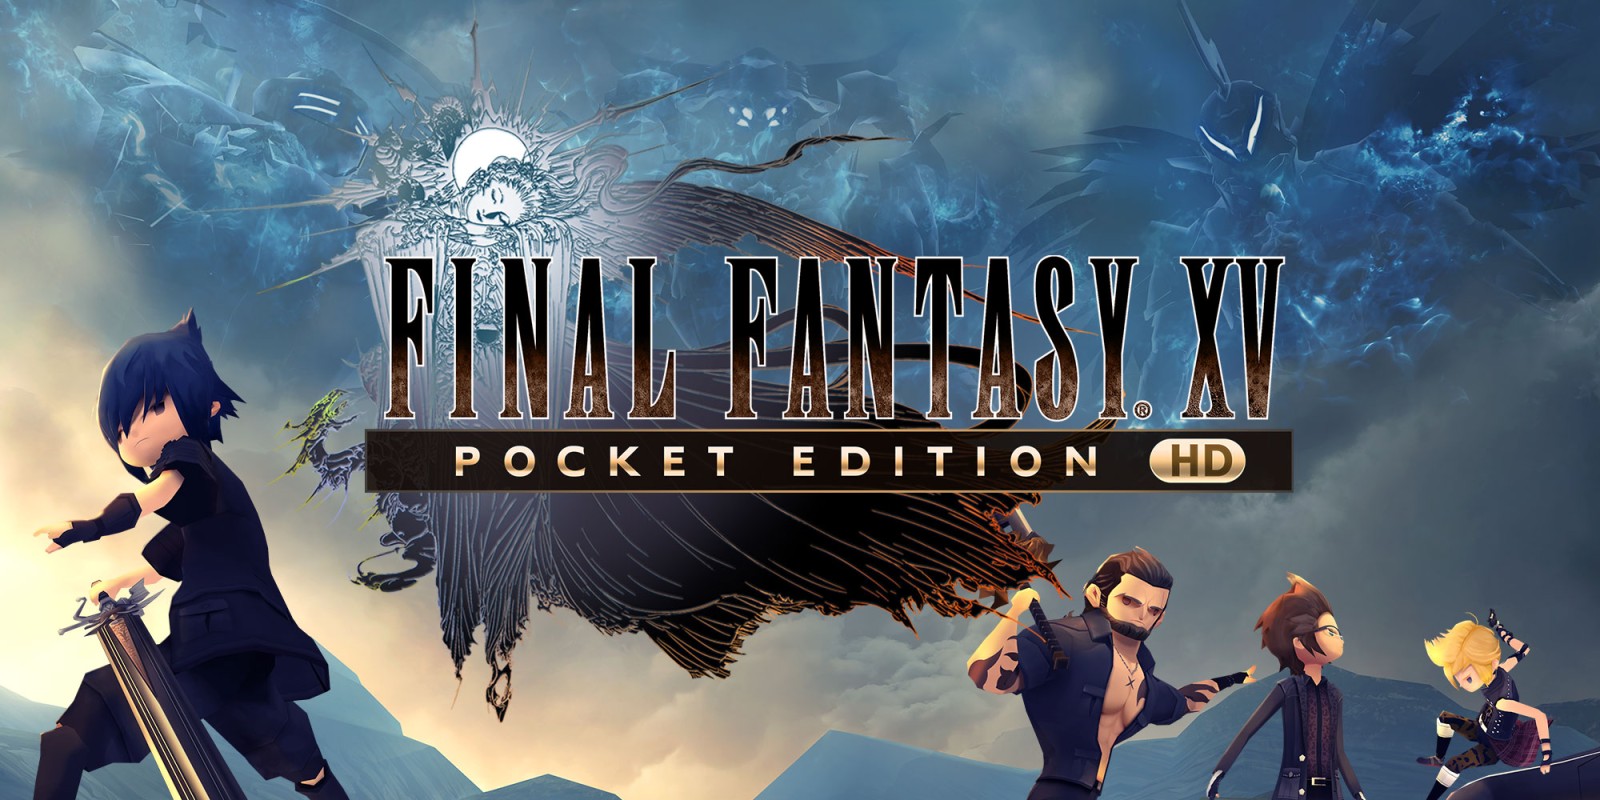 Final Fantasy Xv Pocket Edition Hd | Nintendo Switch Download Software |  Games | Nintendo